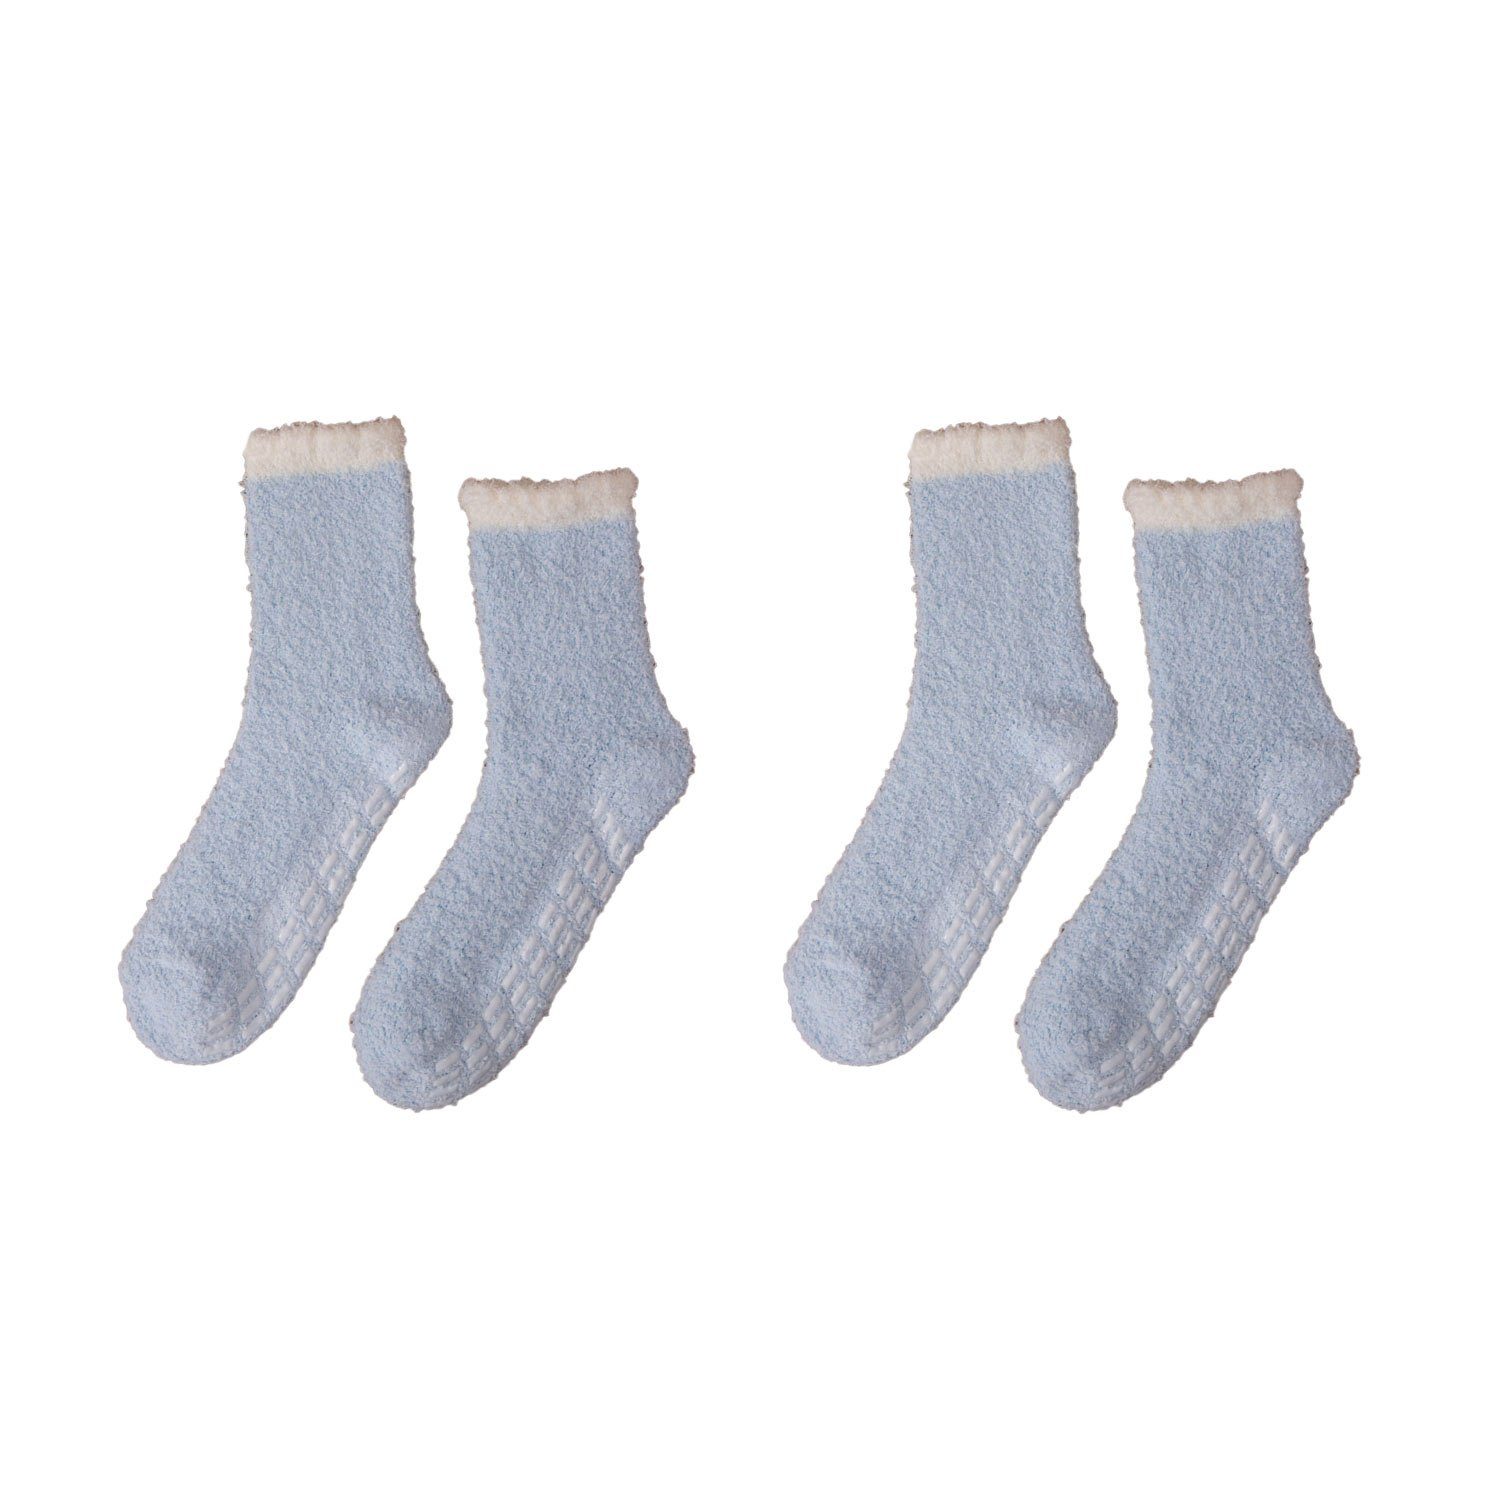 MAGICSHE Langsocken 2 Paare für Winter weiche flauschige Socken Rutschfeste und warme Fleece Socken hellblau | Socken